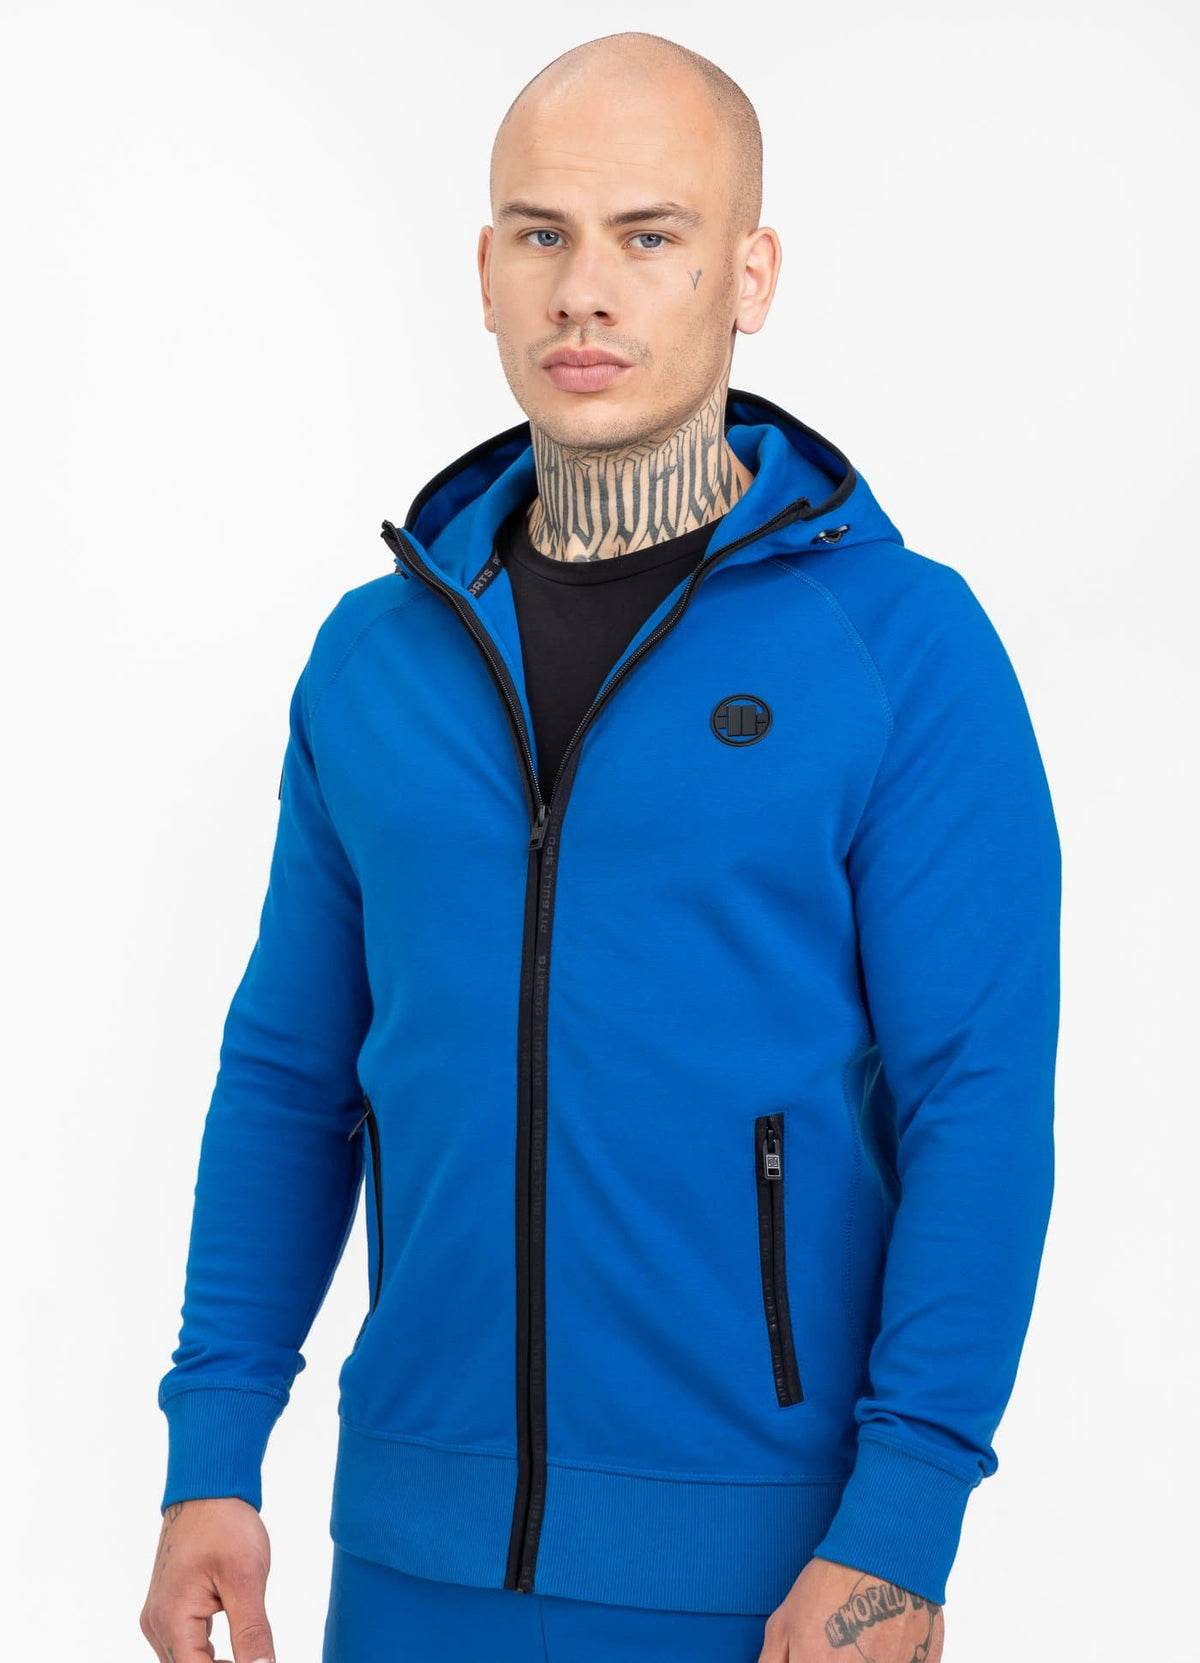 Hooded Sweatjacket HARRIS Royal Blue - Pitbull West Coast International Store 